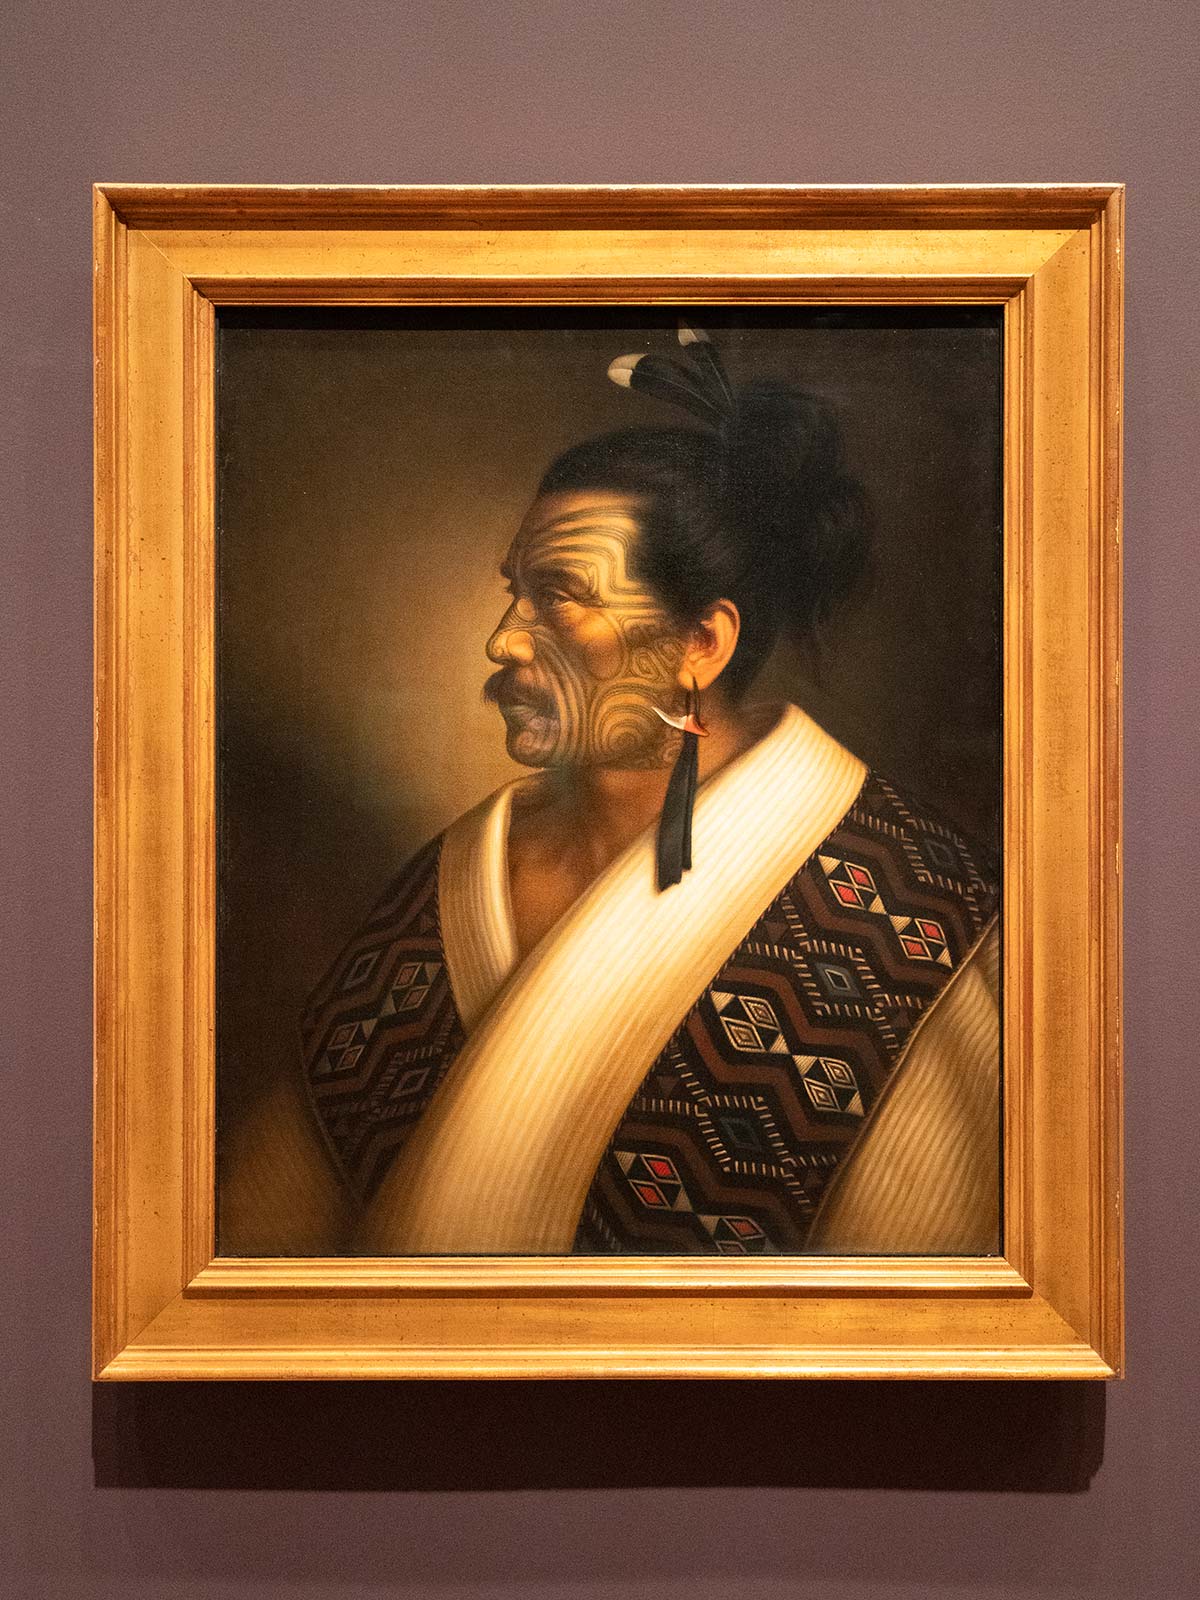 Portrait maori, Musée Art Gallery, Auckland, Nouvelle-Zélande / Maori Portrait, Auckland Art Gallery, New Zealand